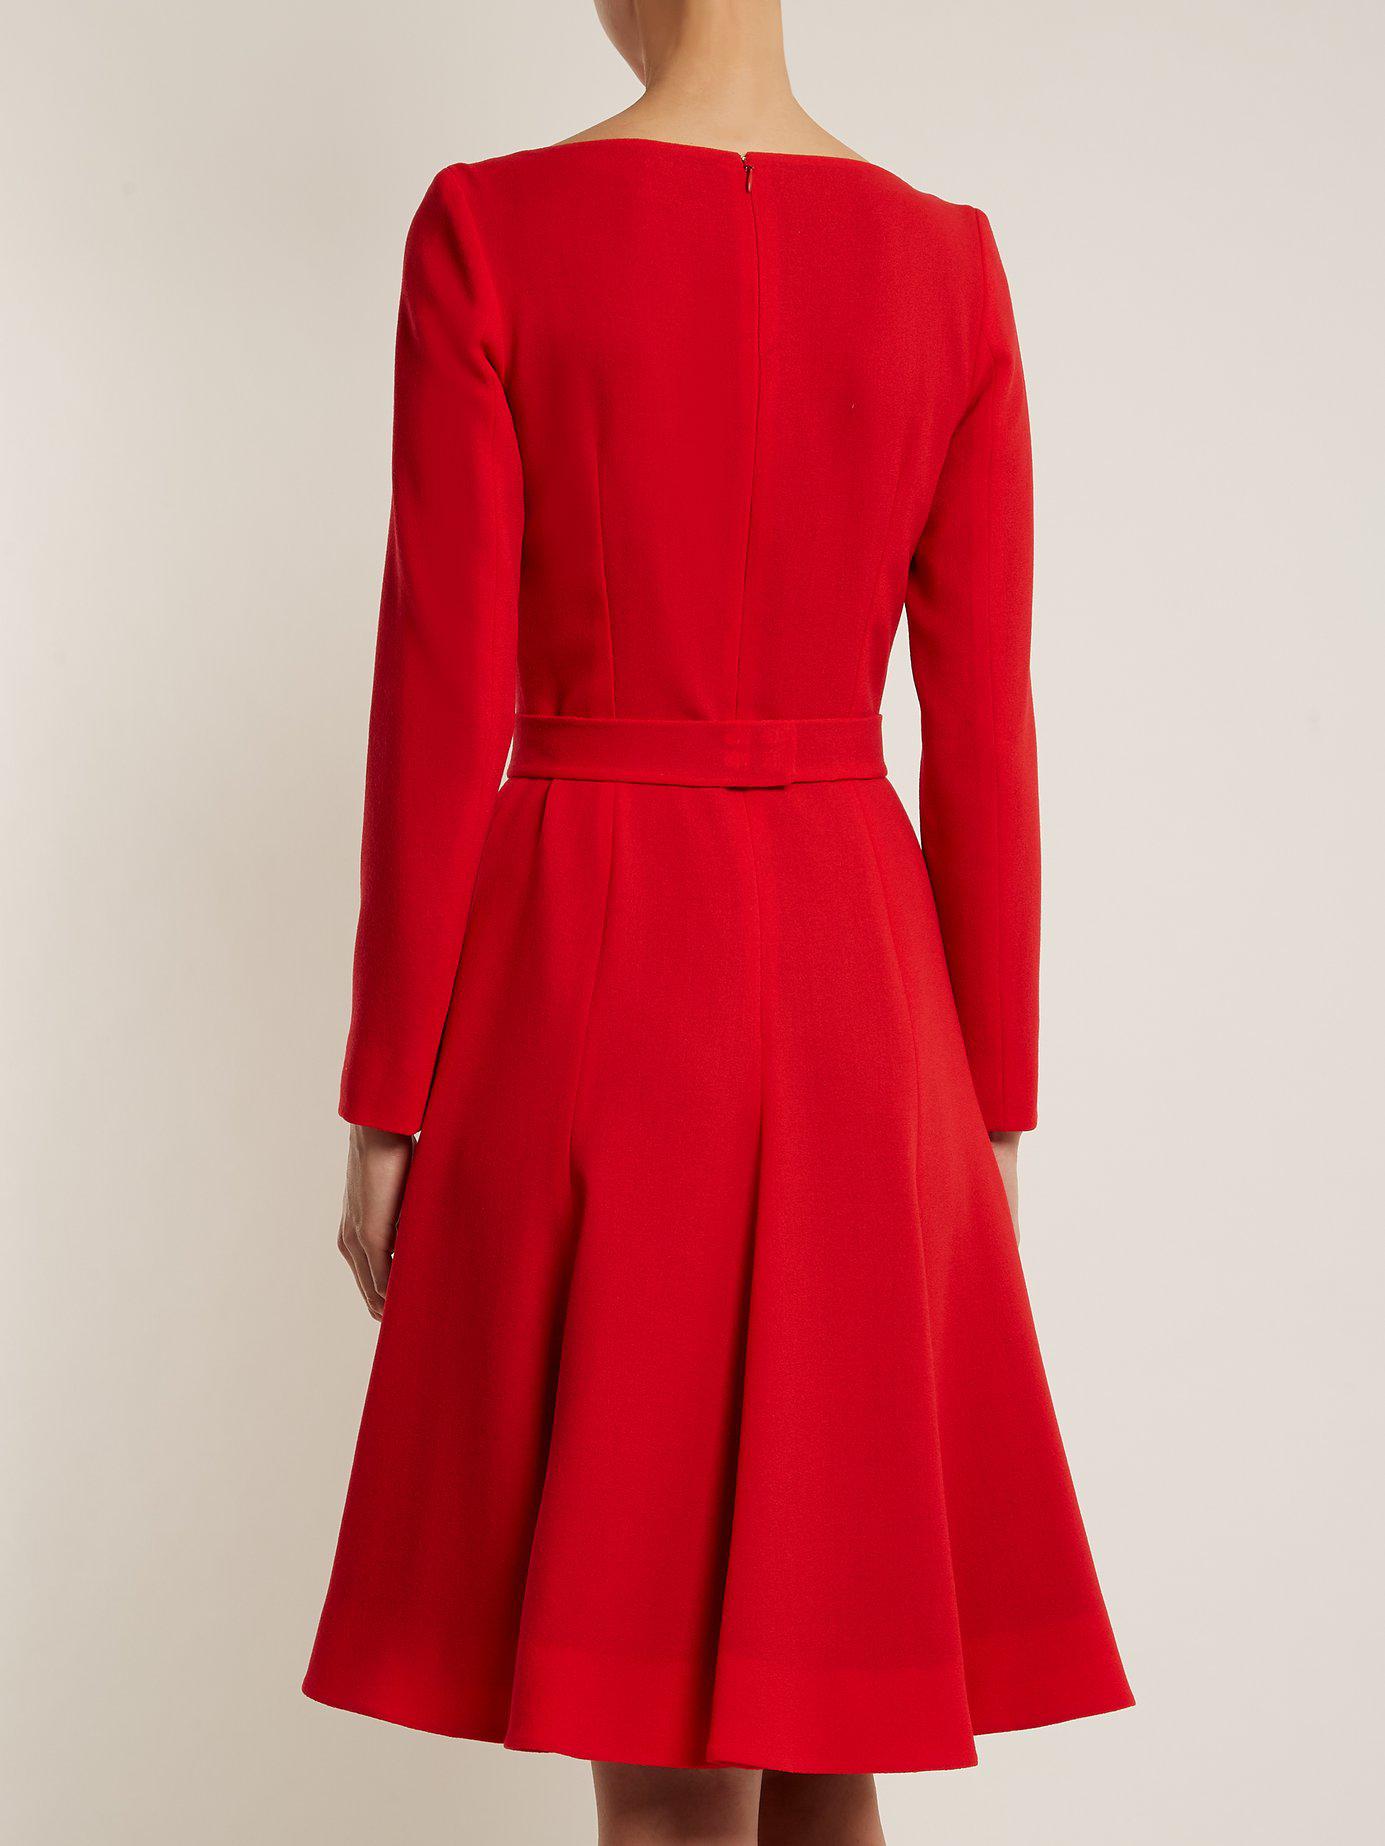 Emilia Wickstead Kate A Line Wool Crepe Dress in Red | Lyst